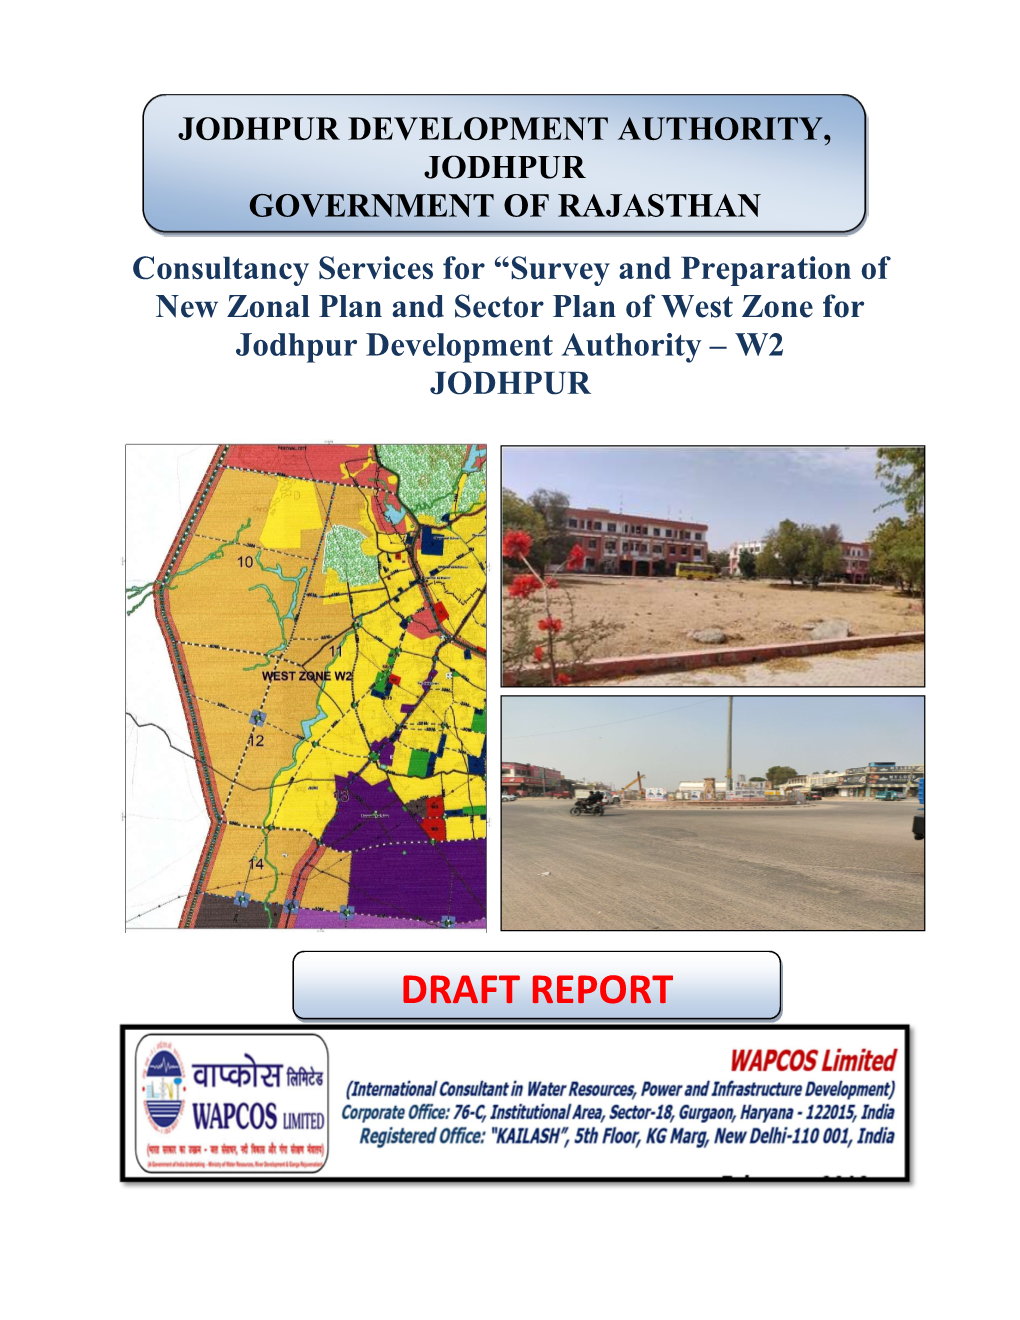 DRAFT REPORT Zonal Development Plan -West Zone W2, Jodhpur Government of Rajasthan